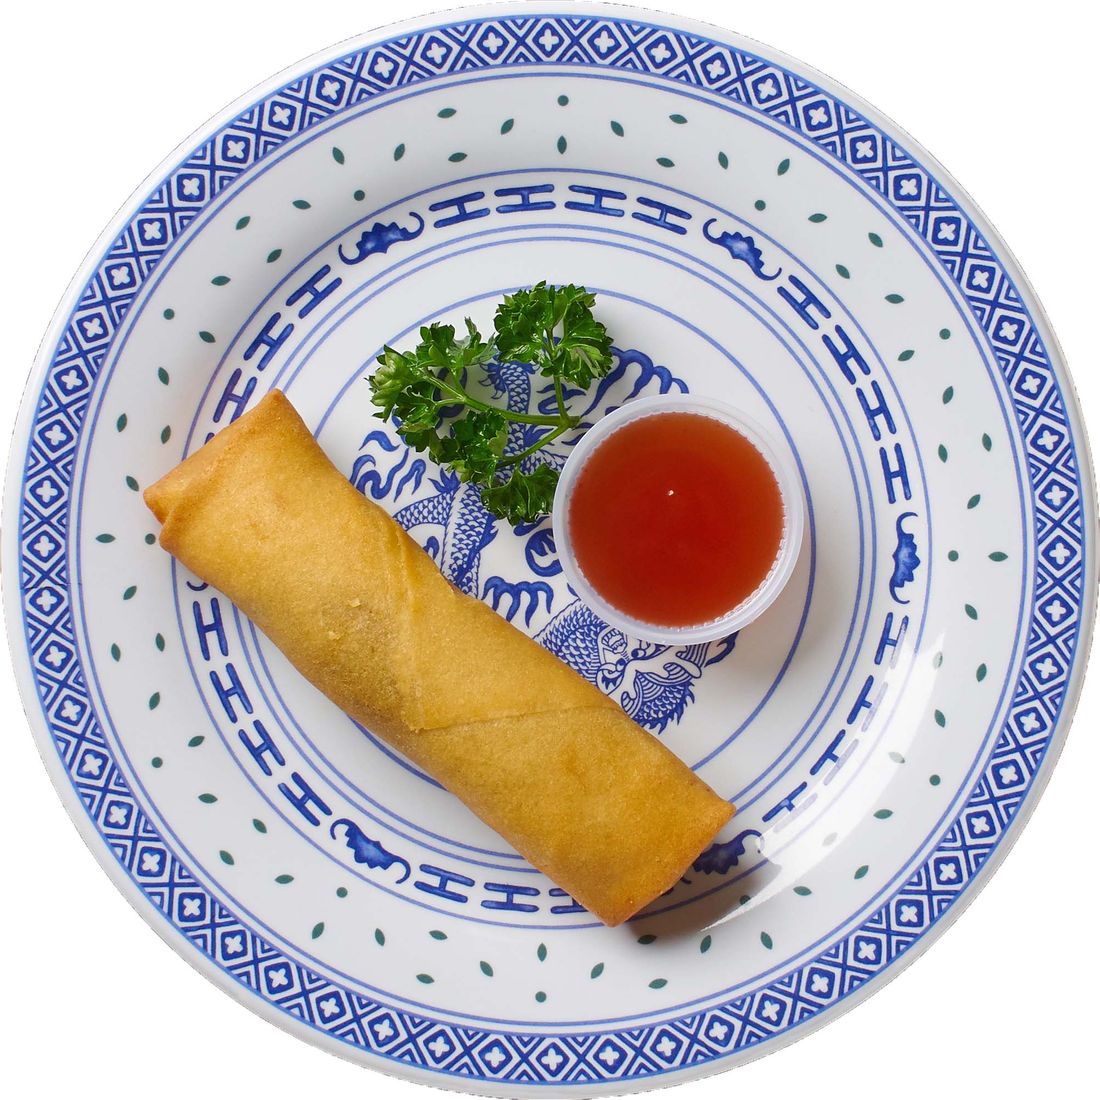 Fruehlingsrolle - Kilin Palast China Food in Lachen